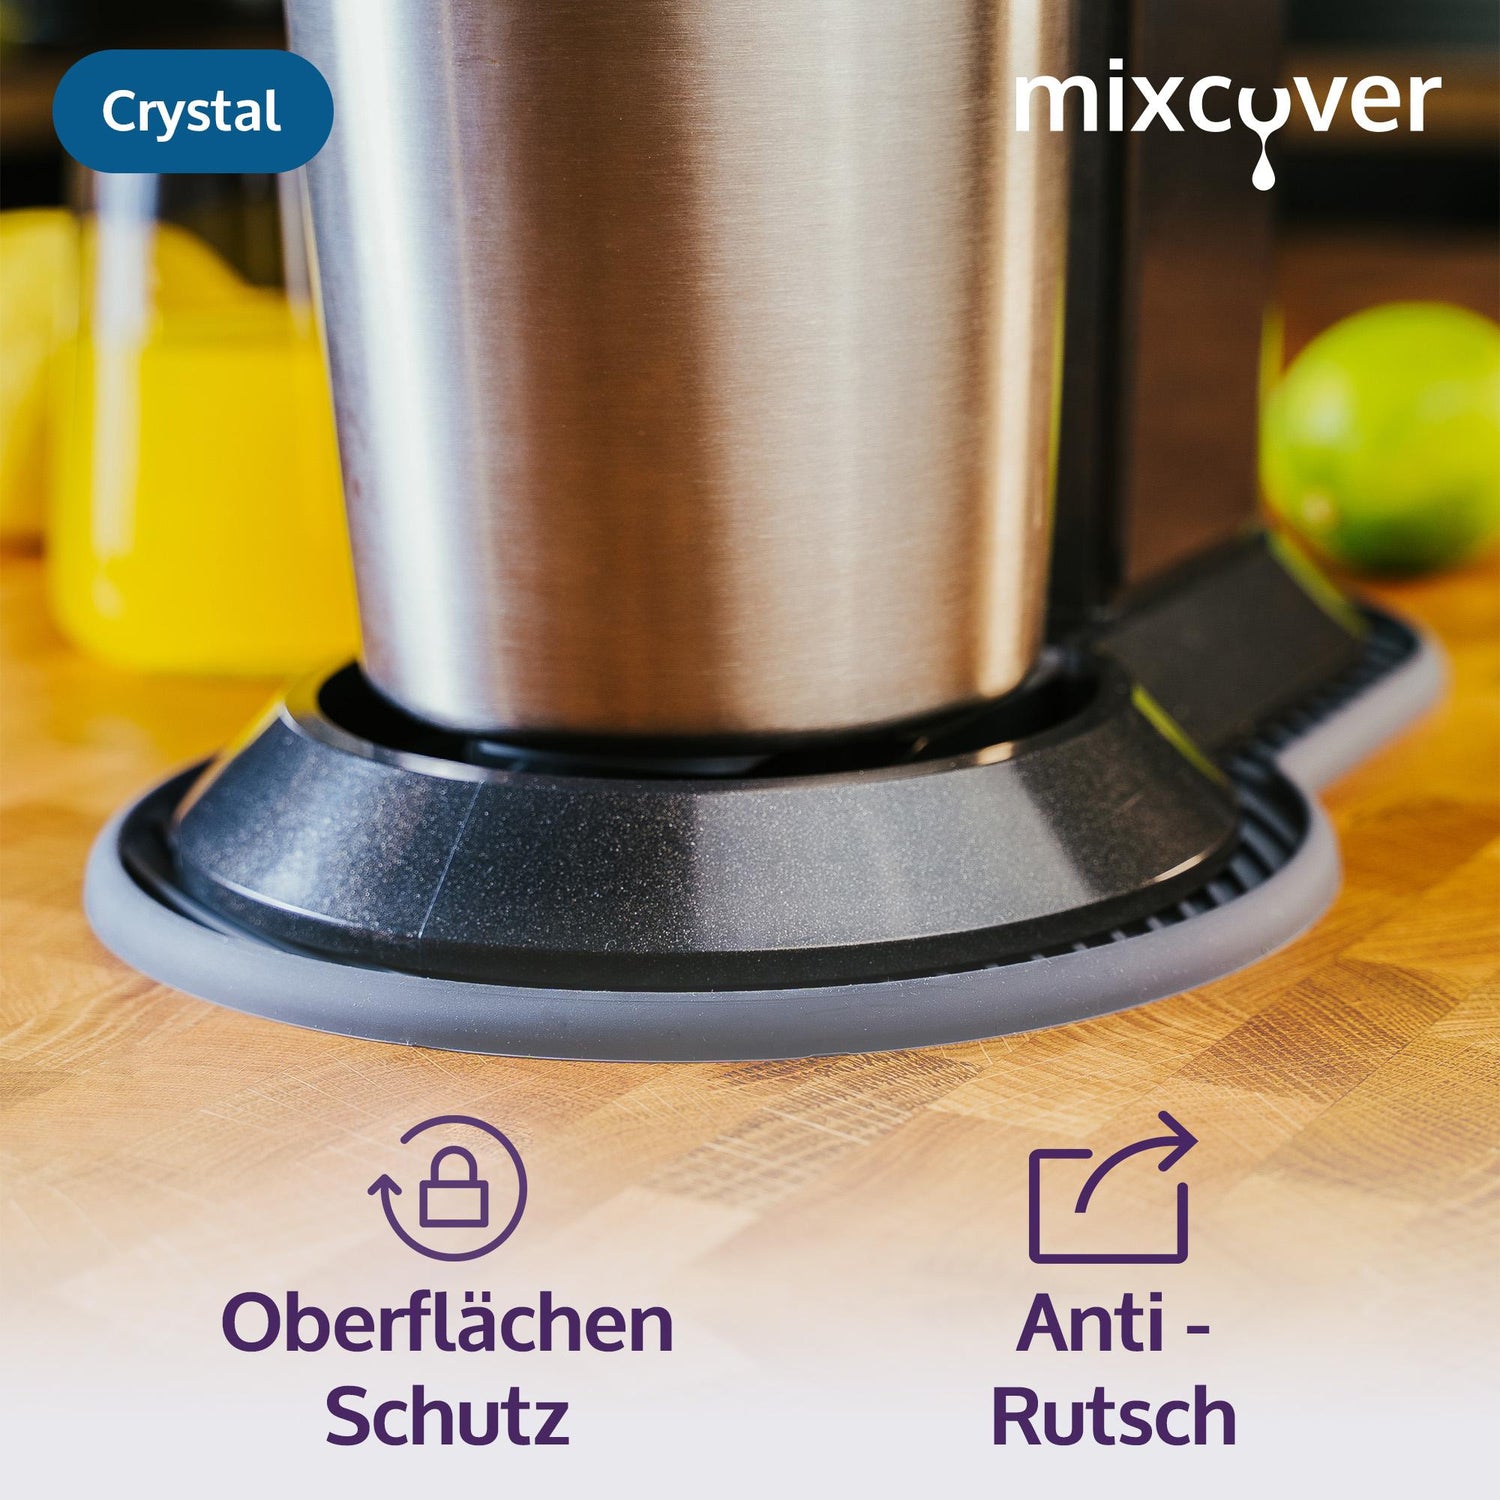 mixcover Silikonmatte, Abtropfmatte Grau kompatibel mit SodaStream Crystal - Mixcover - Mixcover